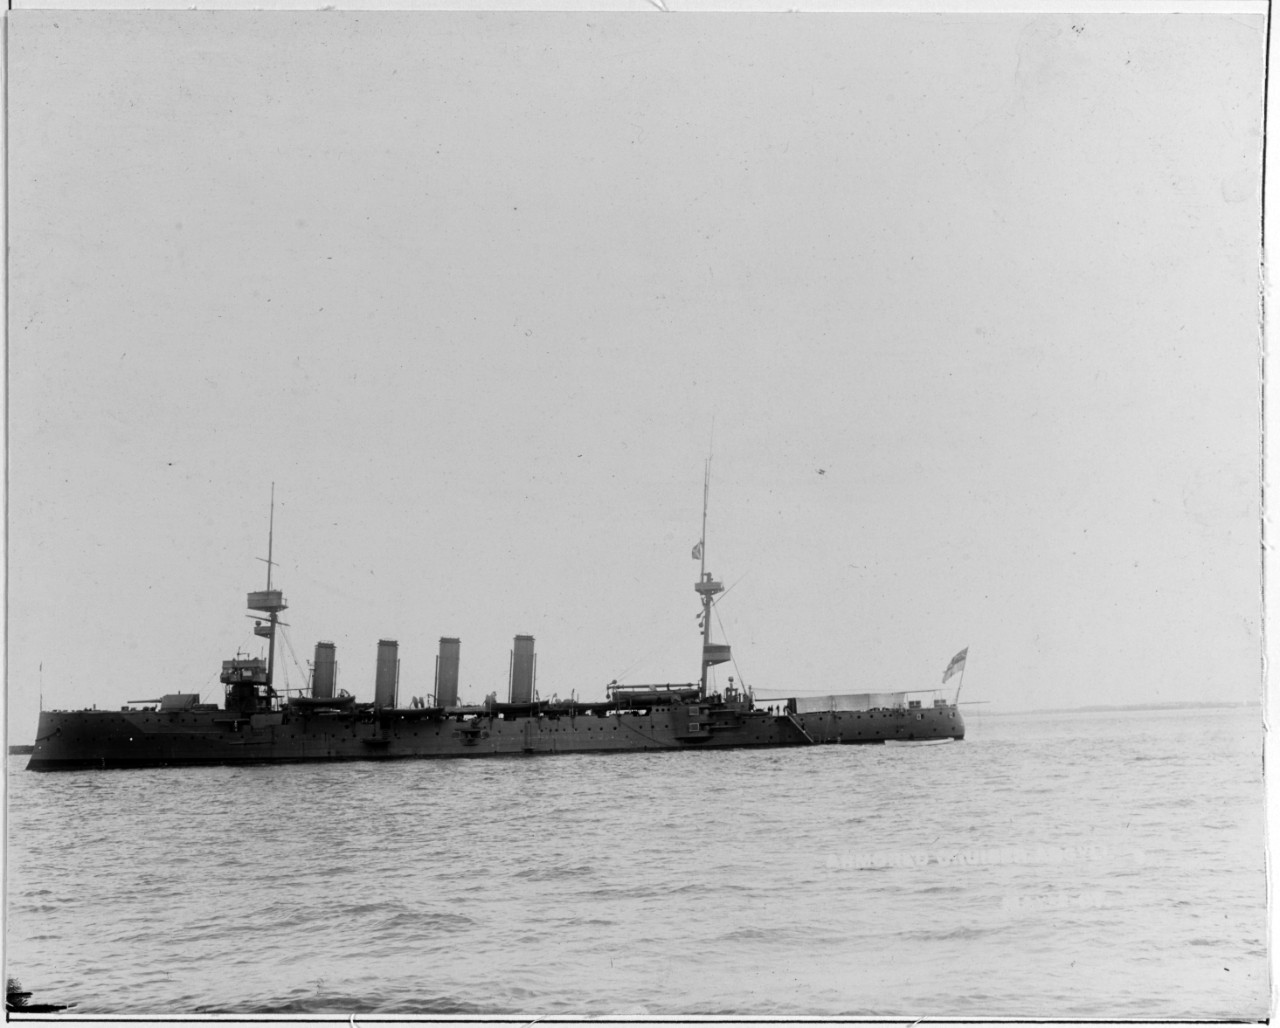 HMS ARGYLL (British armored cruiser, 1904)